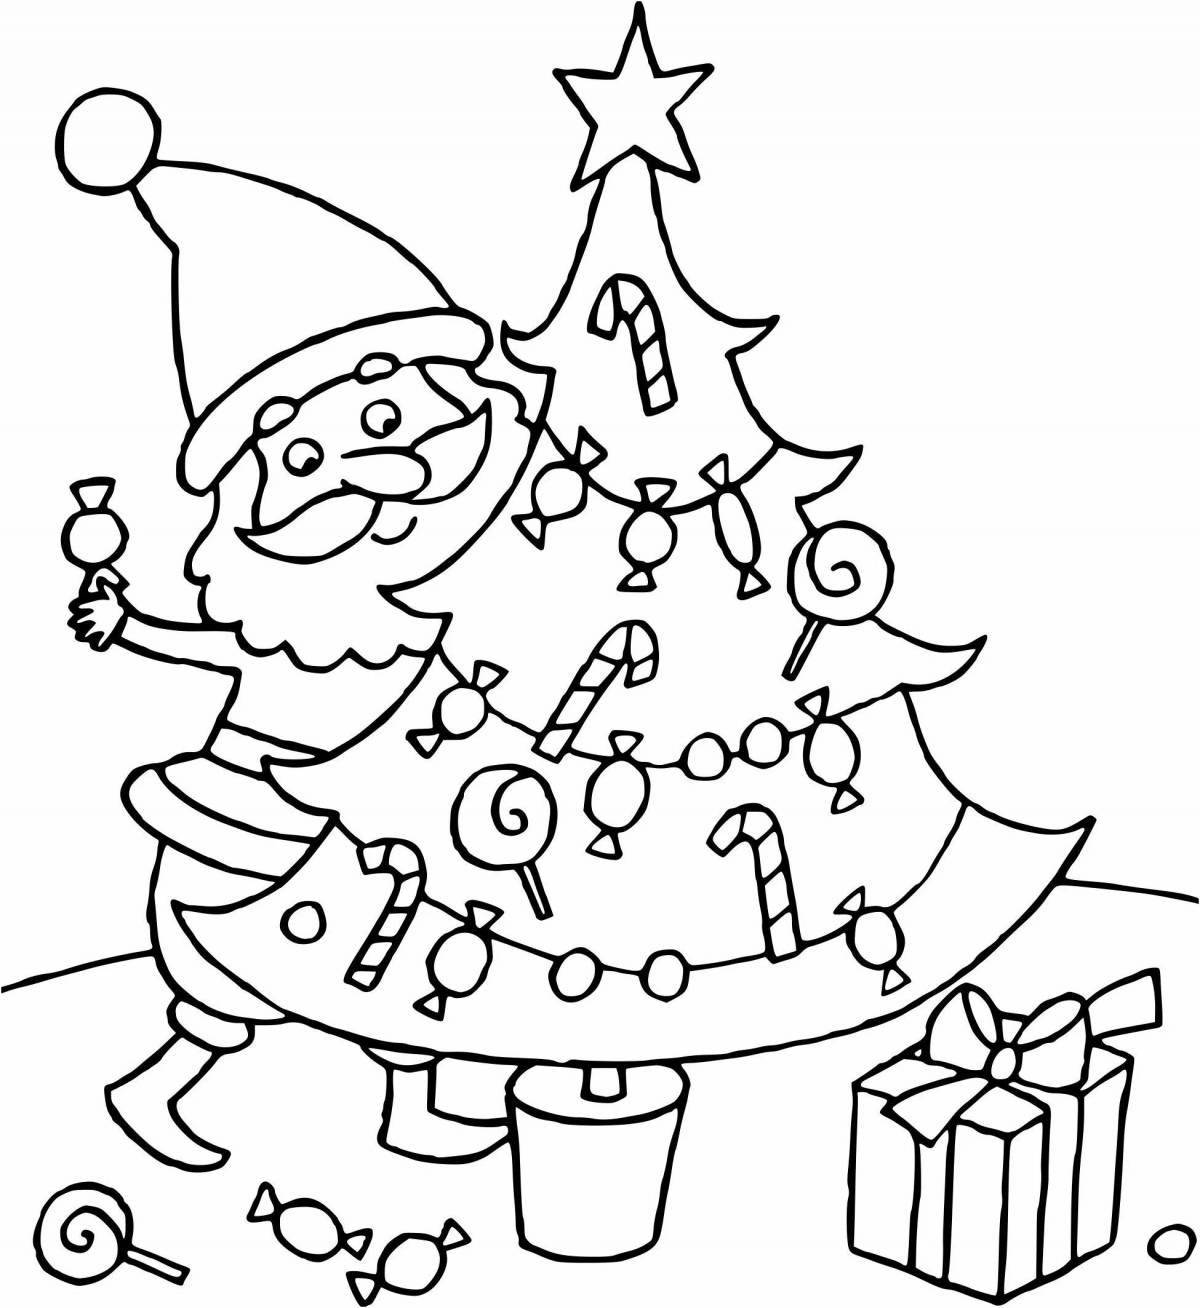 Santa Claus and Christmas tree #3